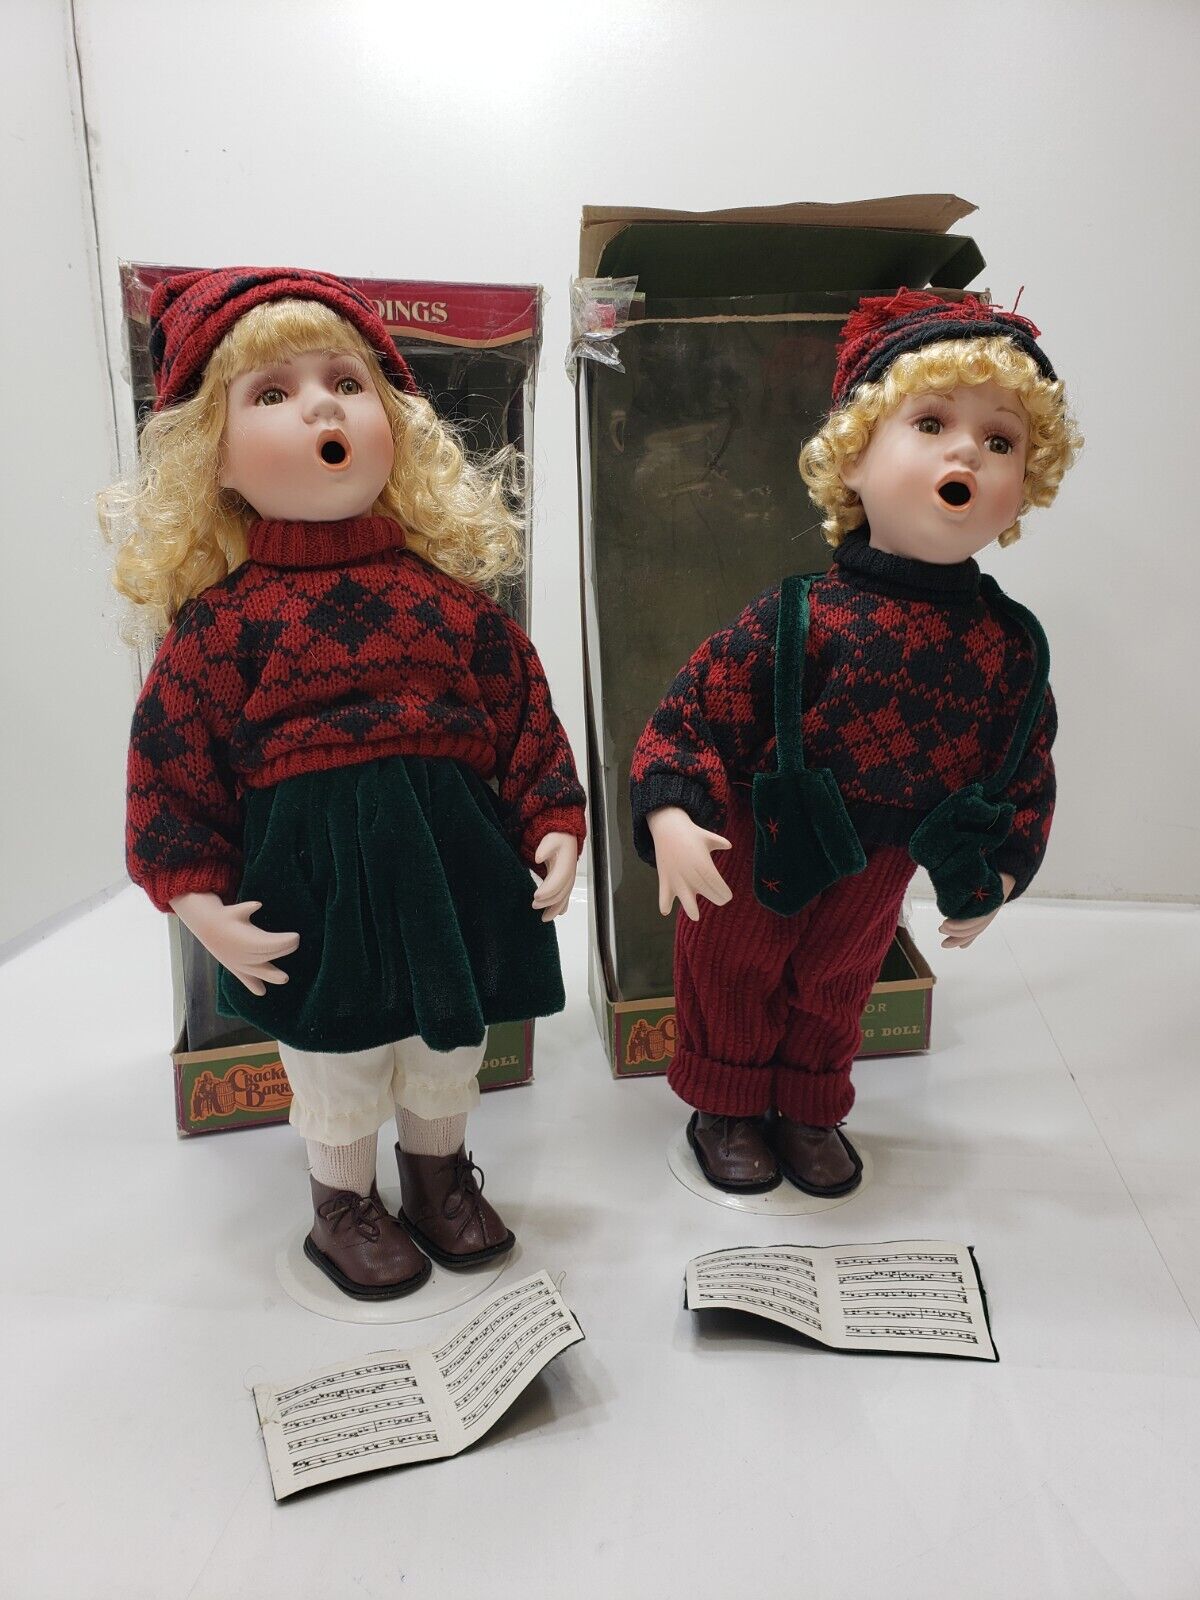 Cracker Barrel Plaid Tidings Christmas Carolers Boy & Girl Set Vintage